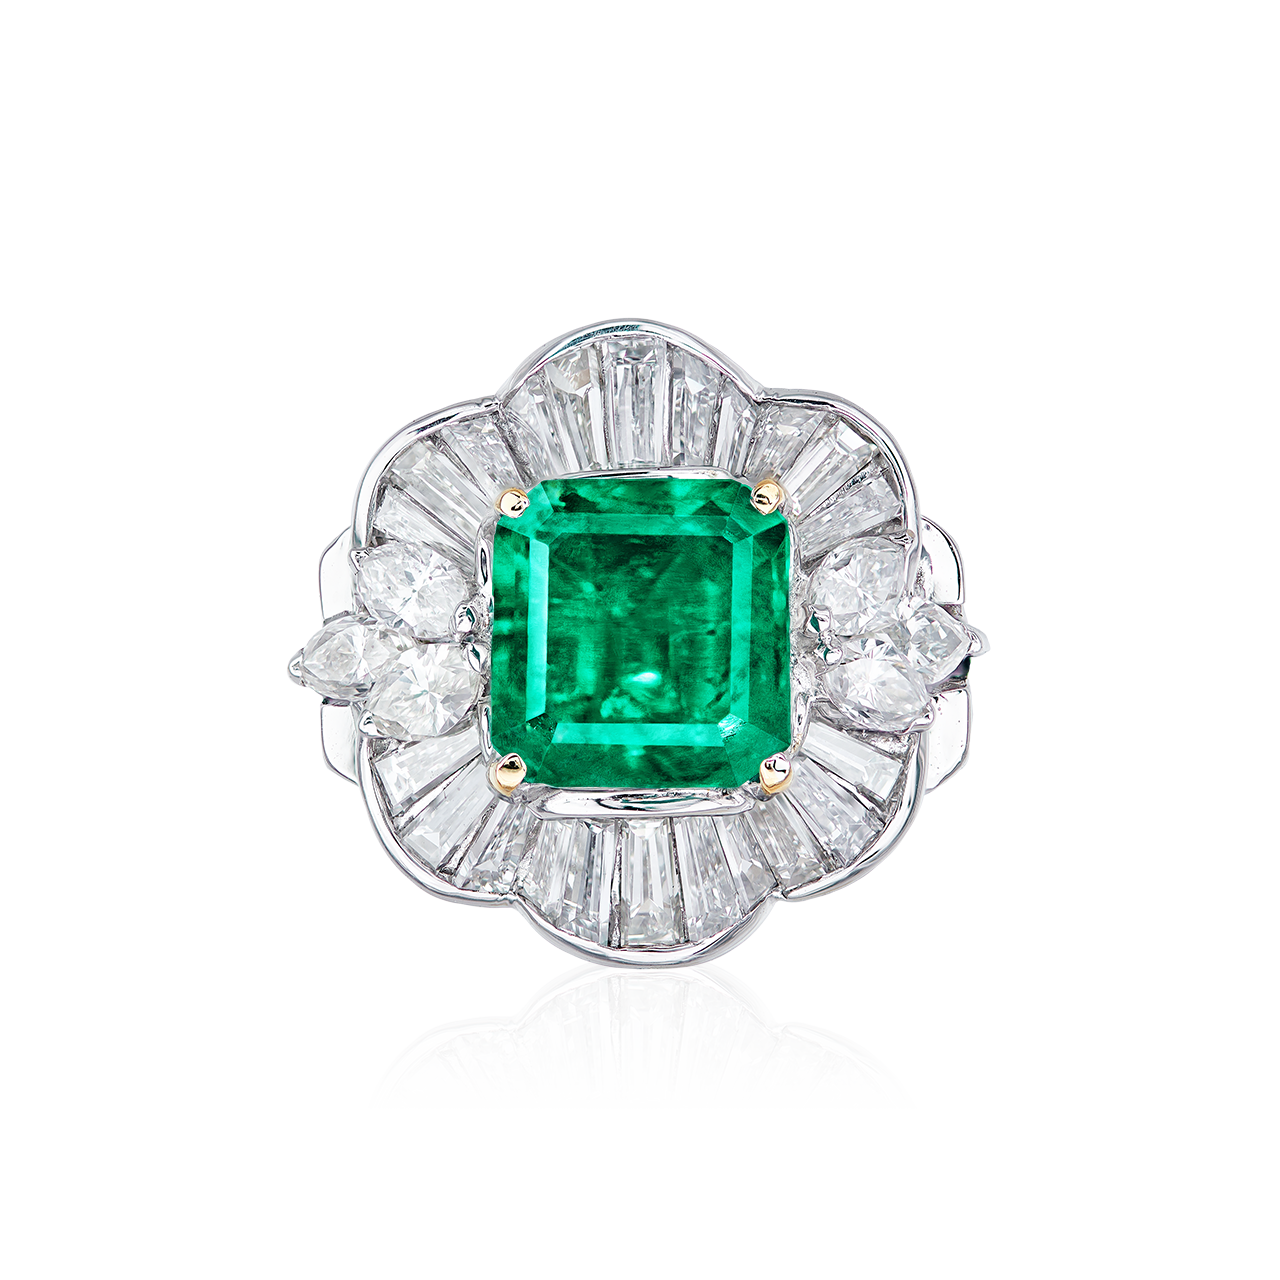 2.347克拉 哥倫比亞艷彩祖母綠鑽戒
Colombian Vivid Green Emerald 
and Diamond Ring